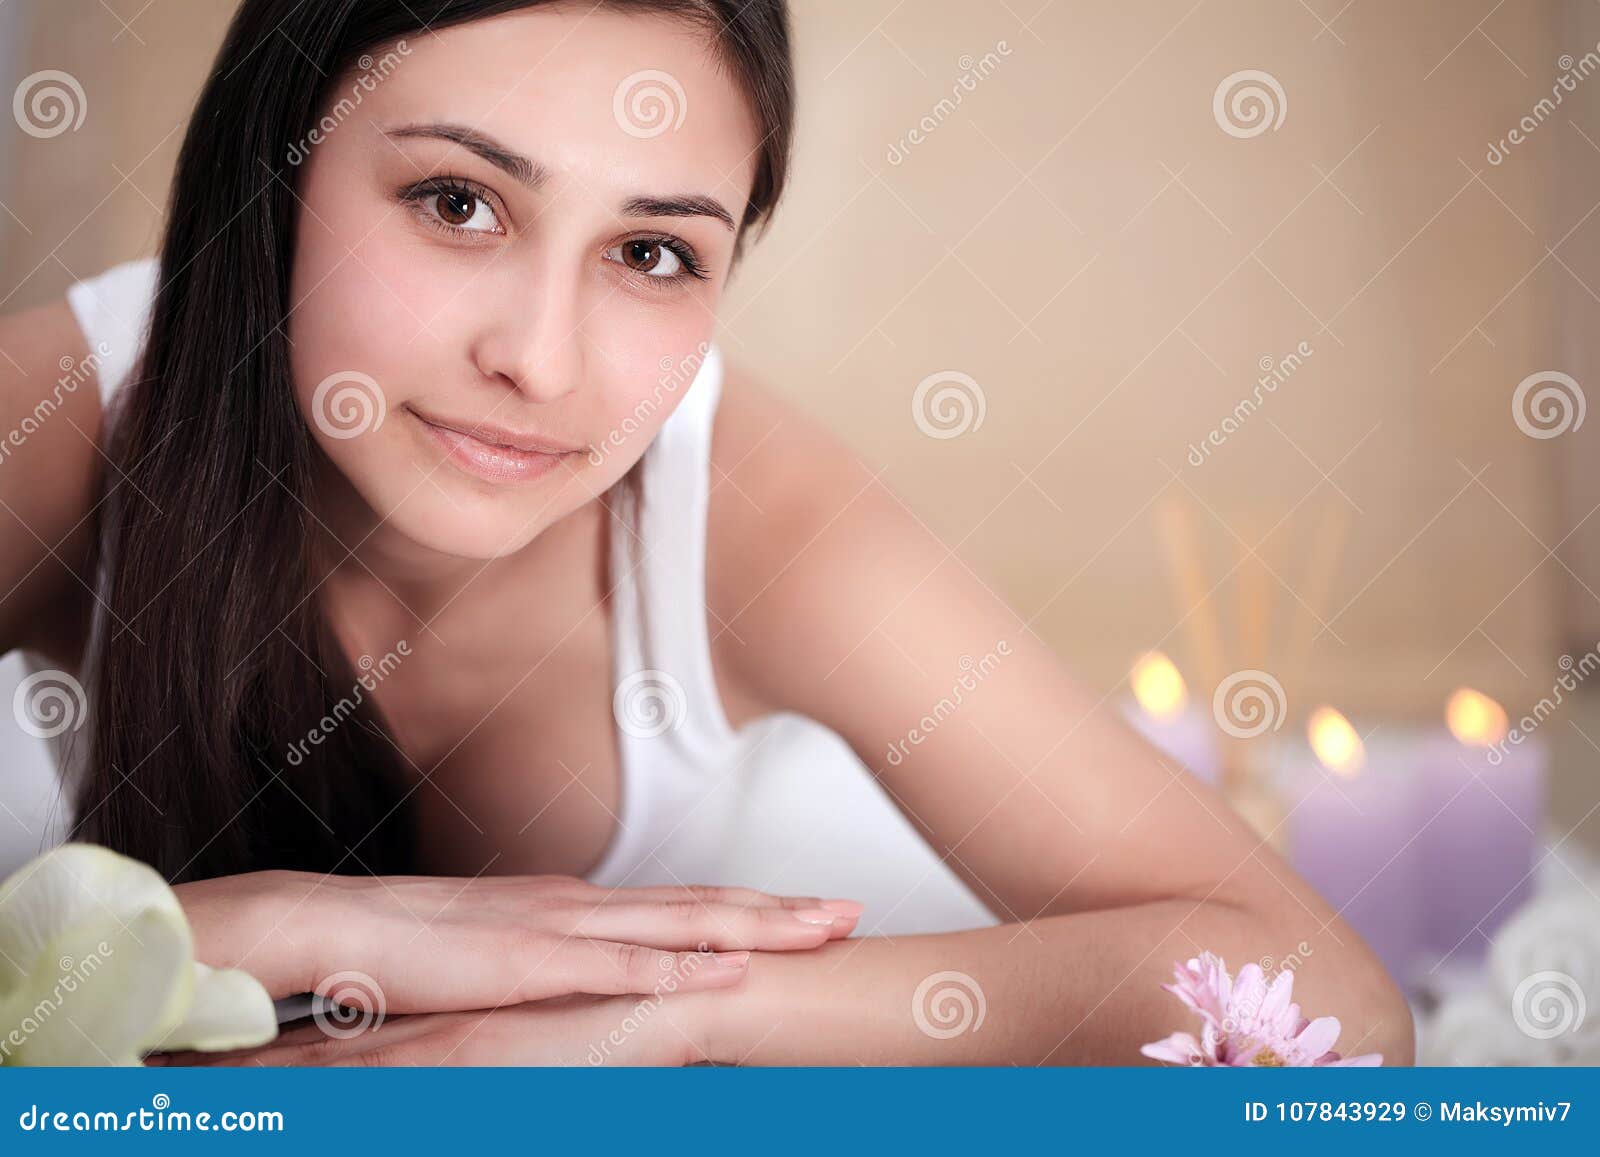 Spa Massage Beautiful Brunette Gets Spa Treatment In Salon Stock Image Image Of Care Skin